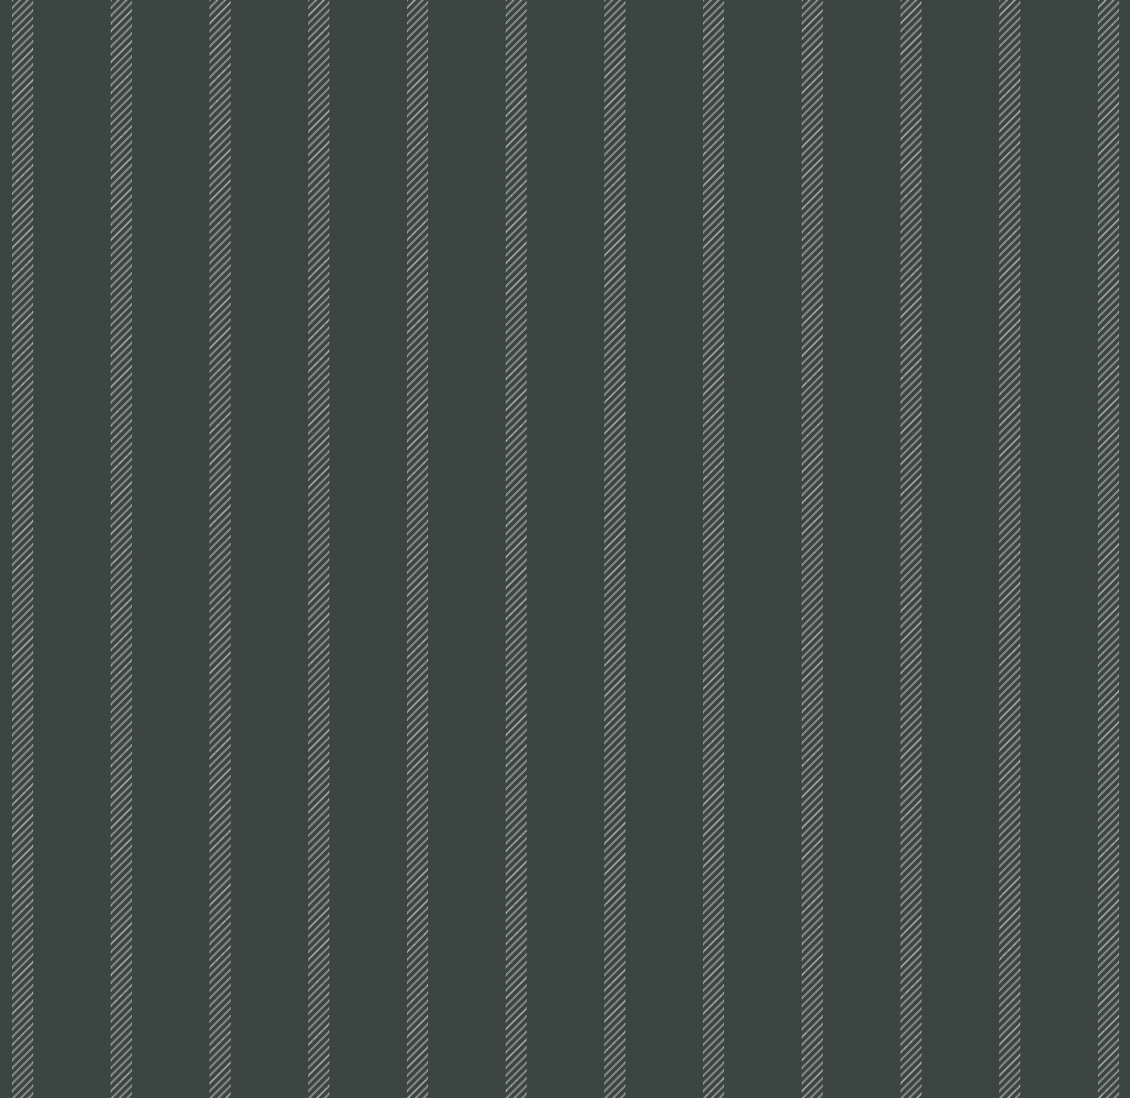 Pinstripe fabric striped wallpaper